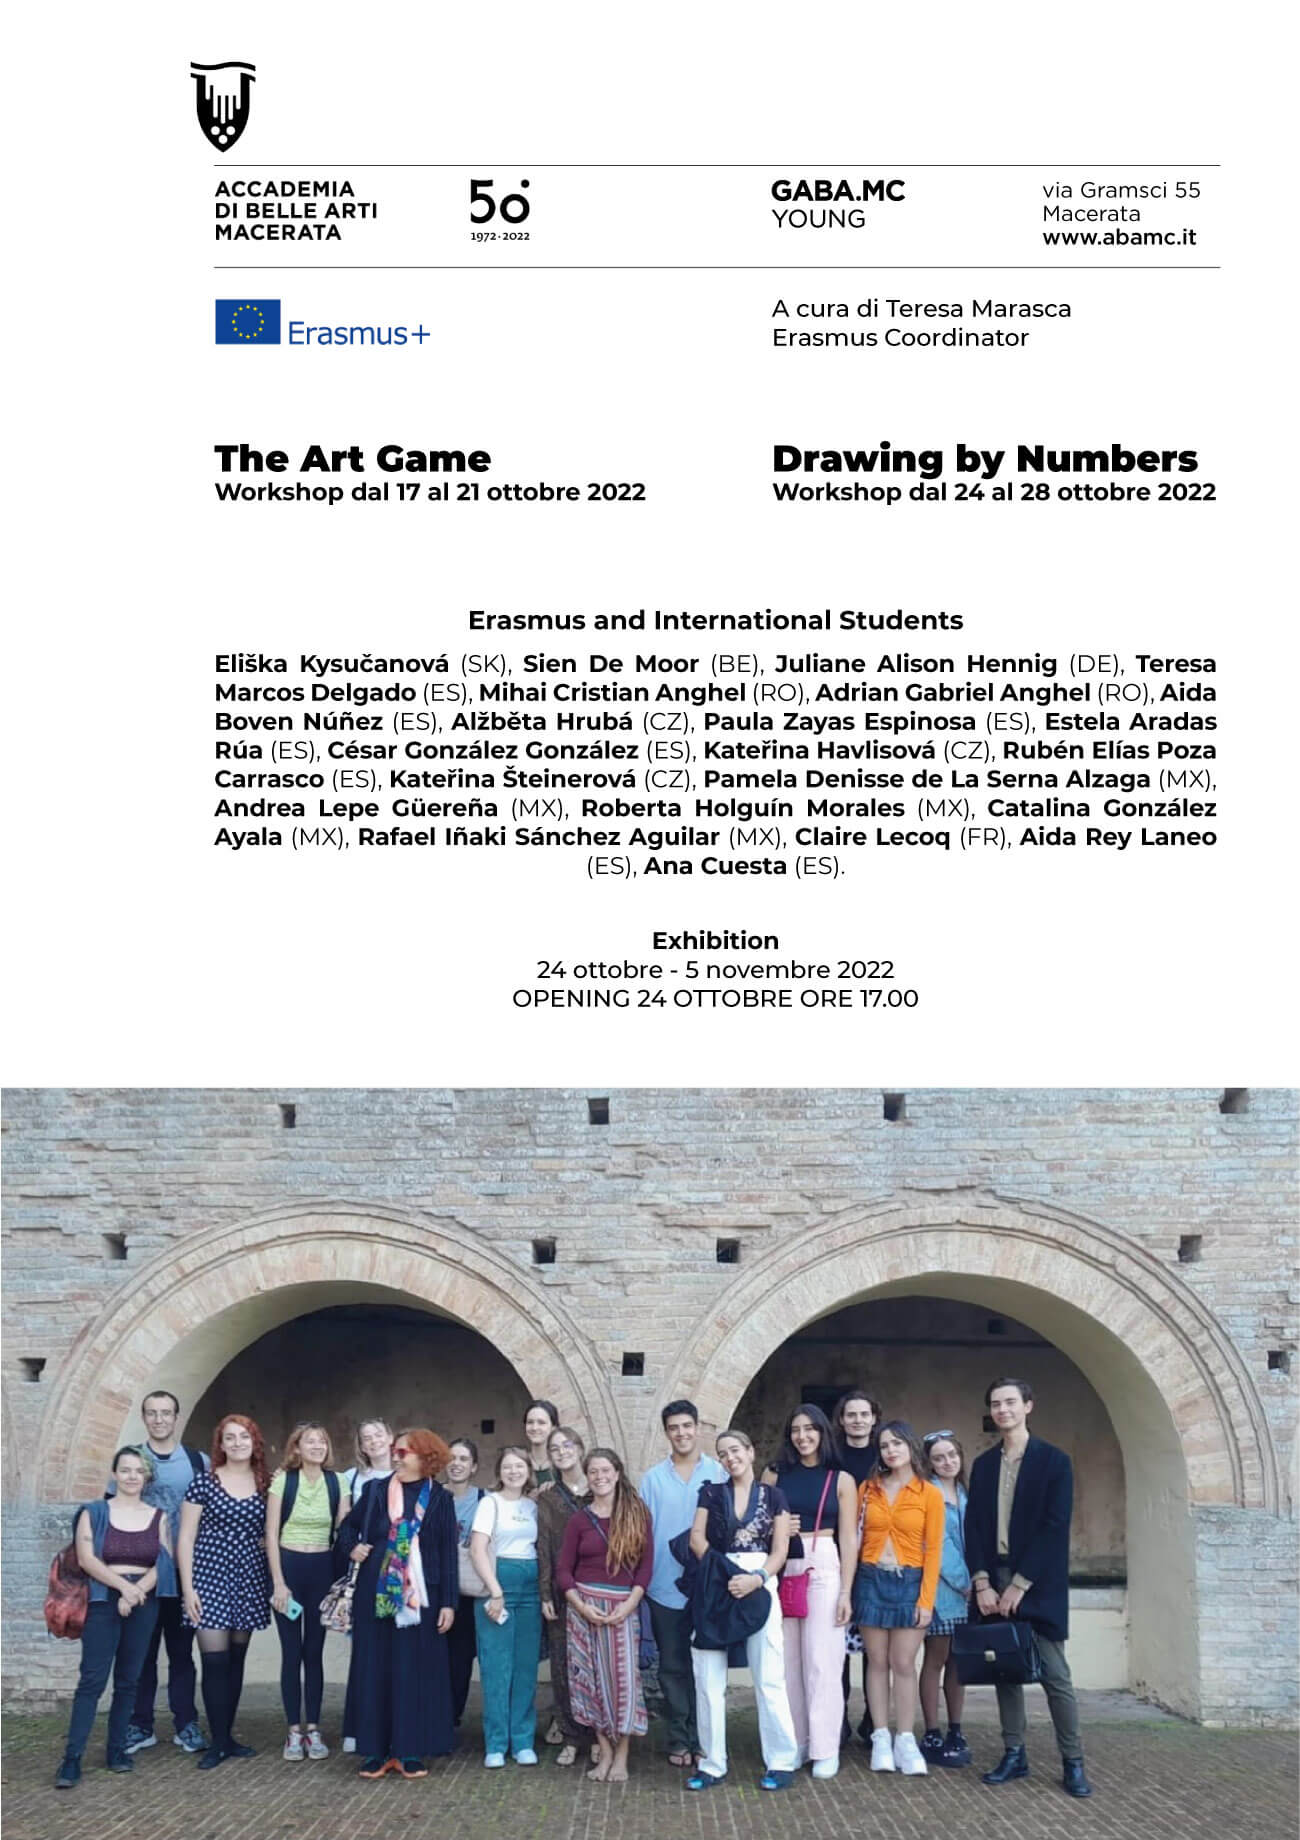 Erasmus and International Students